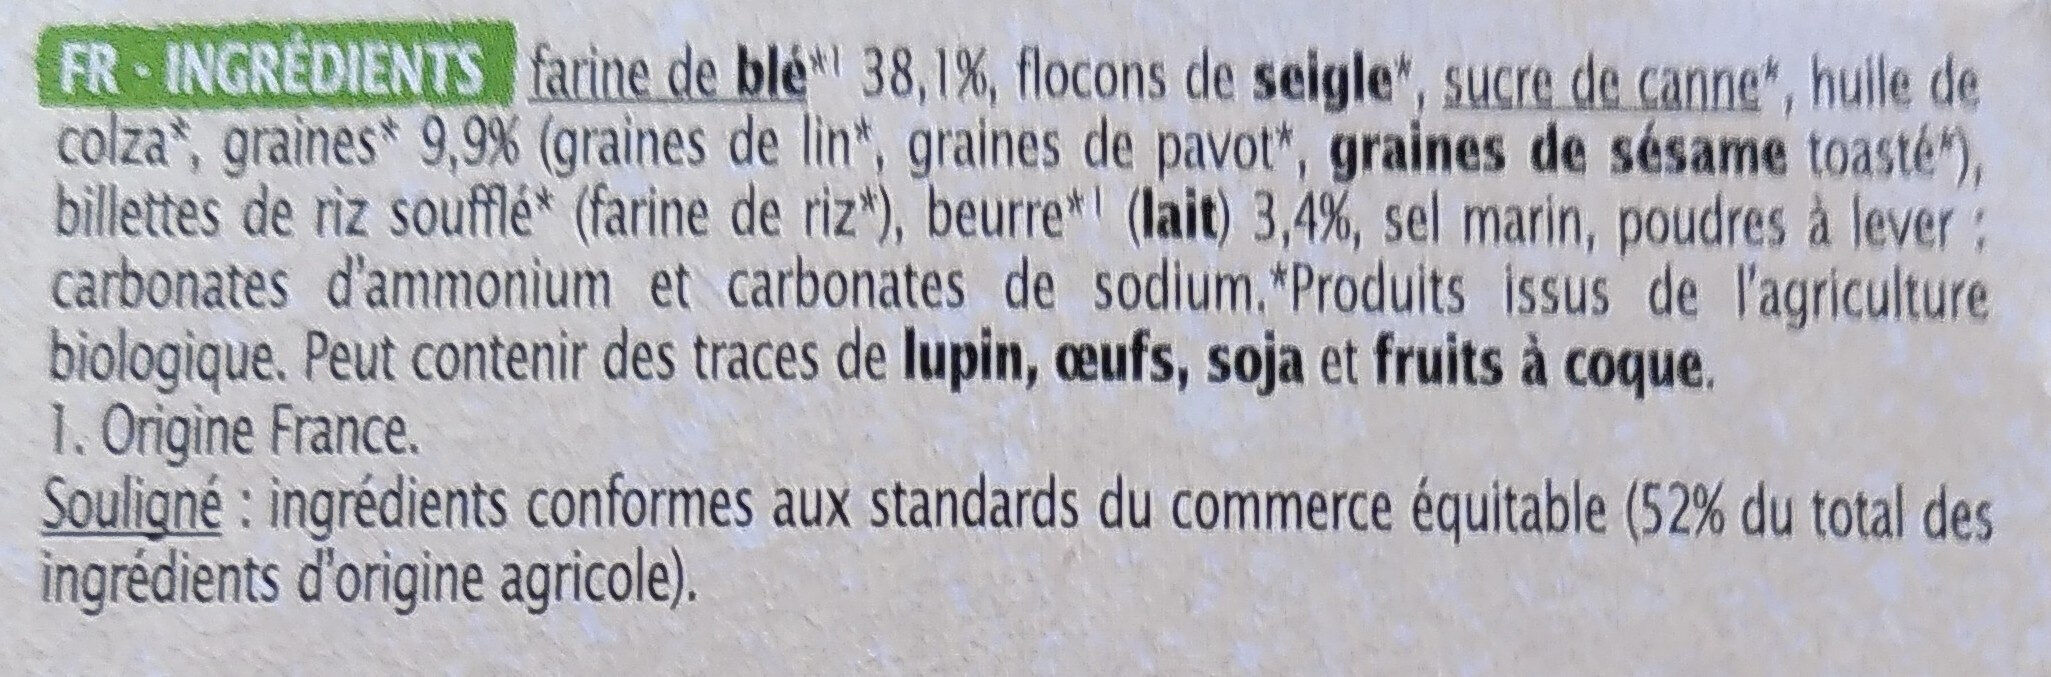 Sables multi graines - Ingredientes - fr